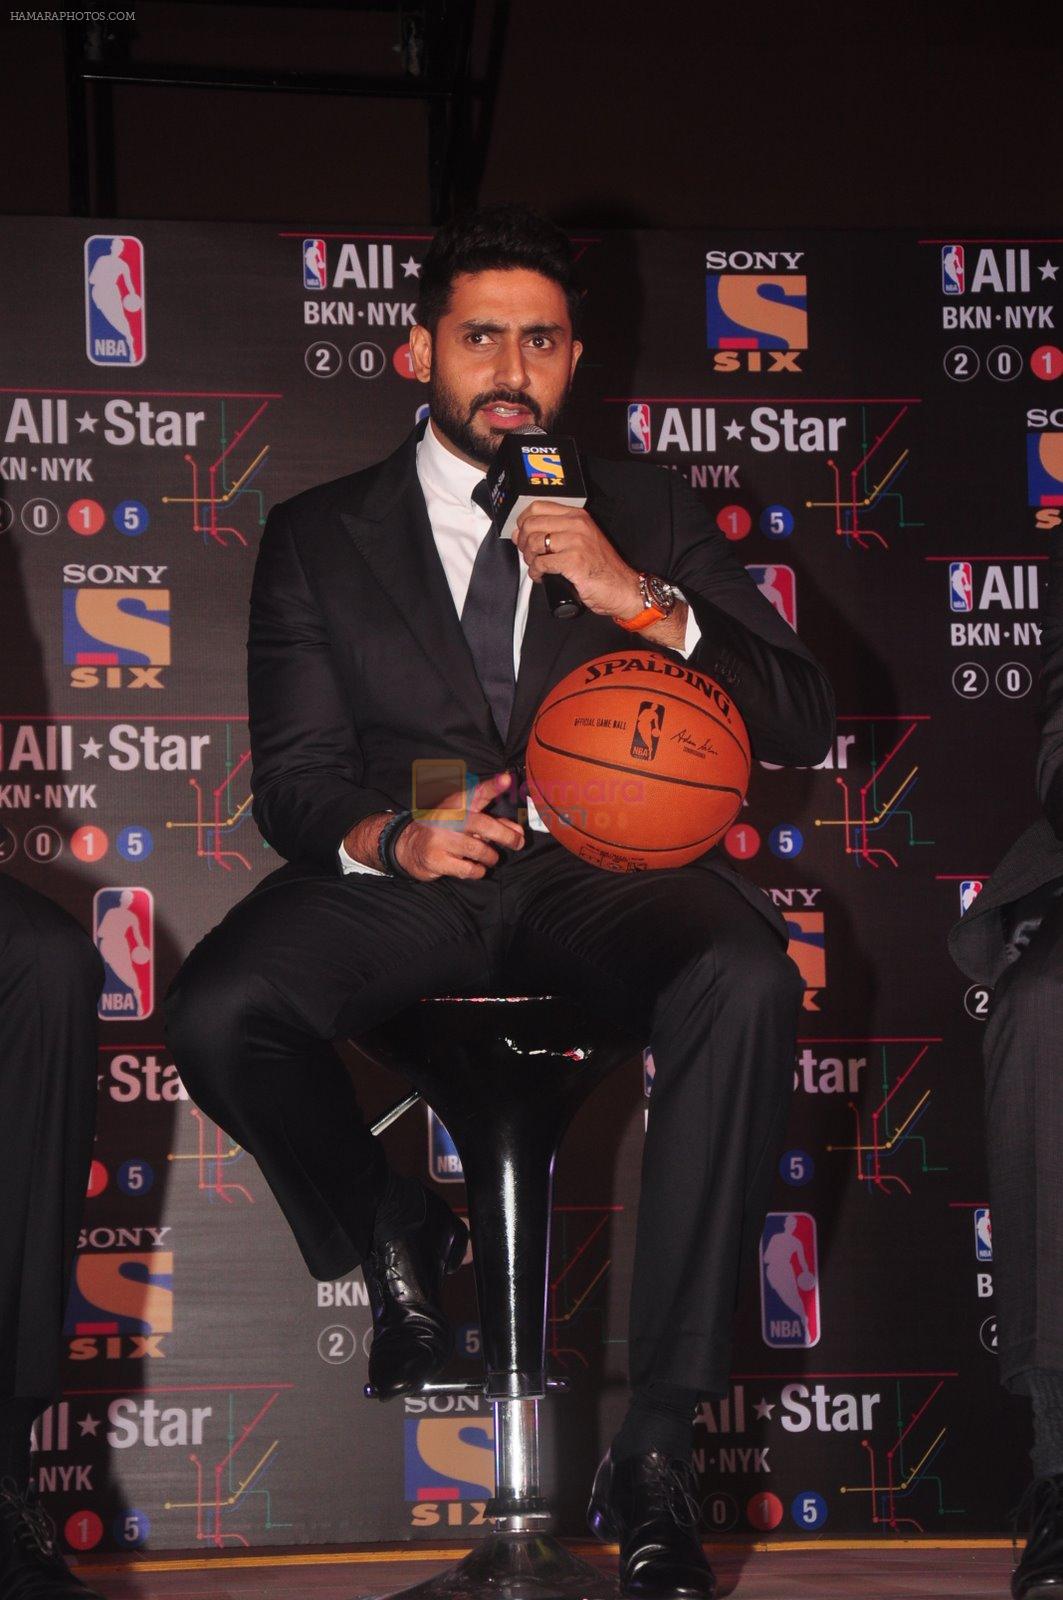 Abhishek Bachchan at NBA stars meet in Grand Hyatt, Mumbai on 7th Feb 2015